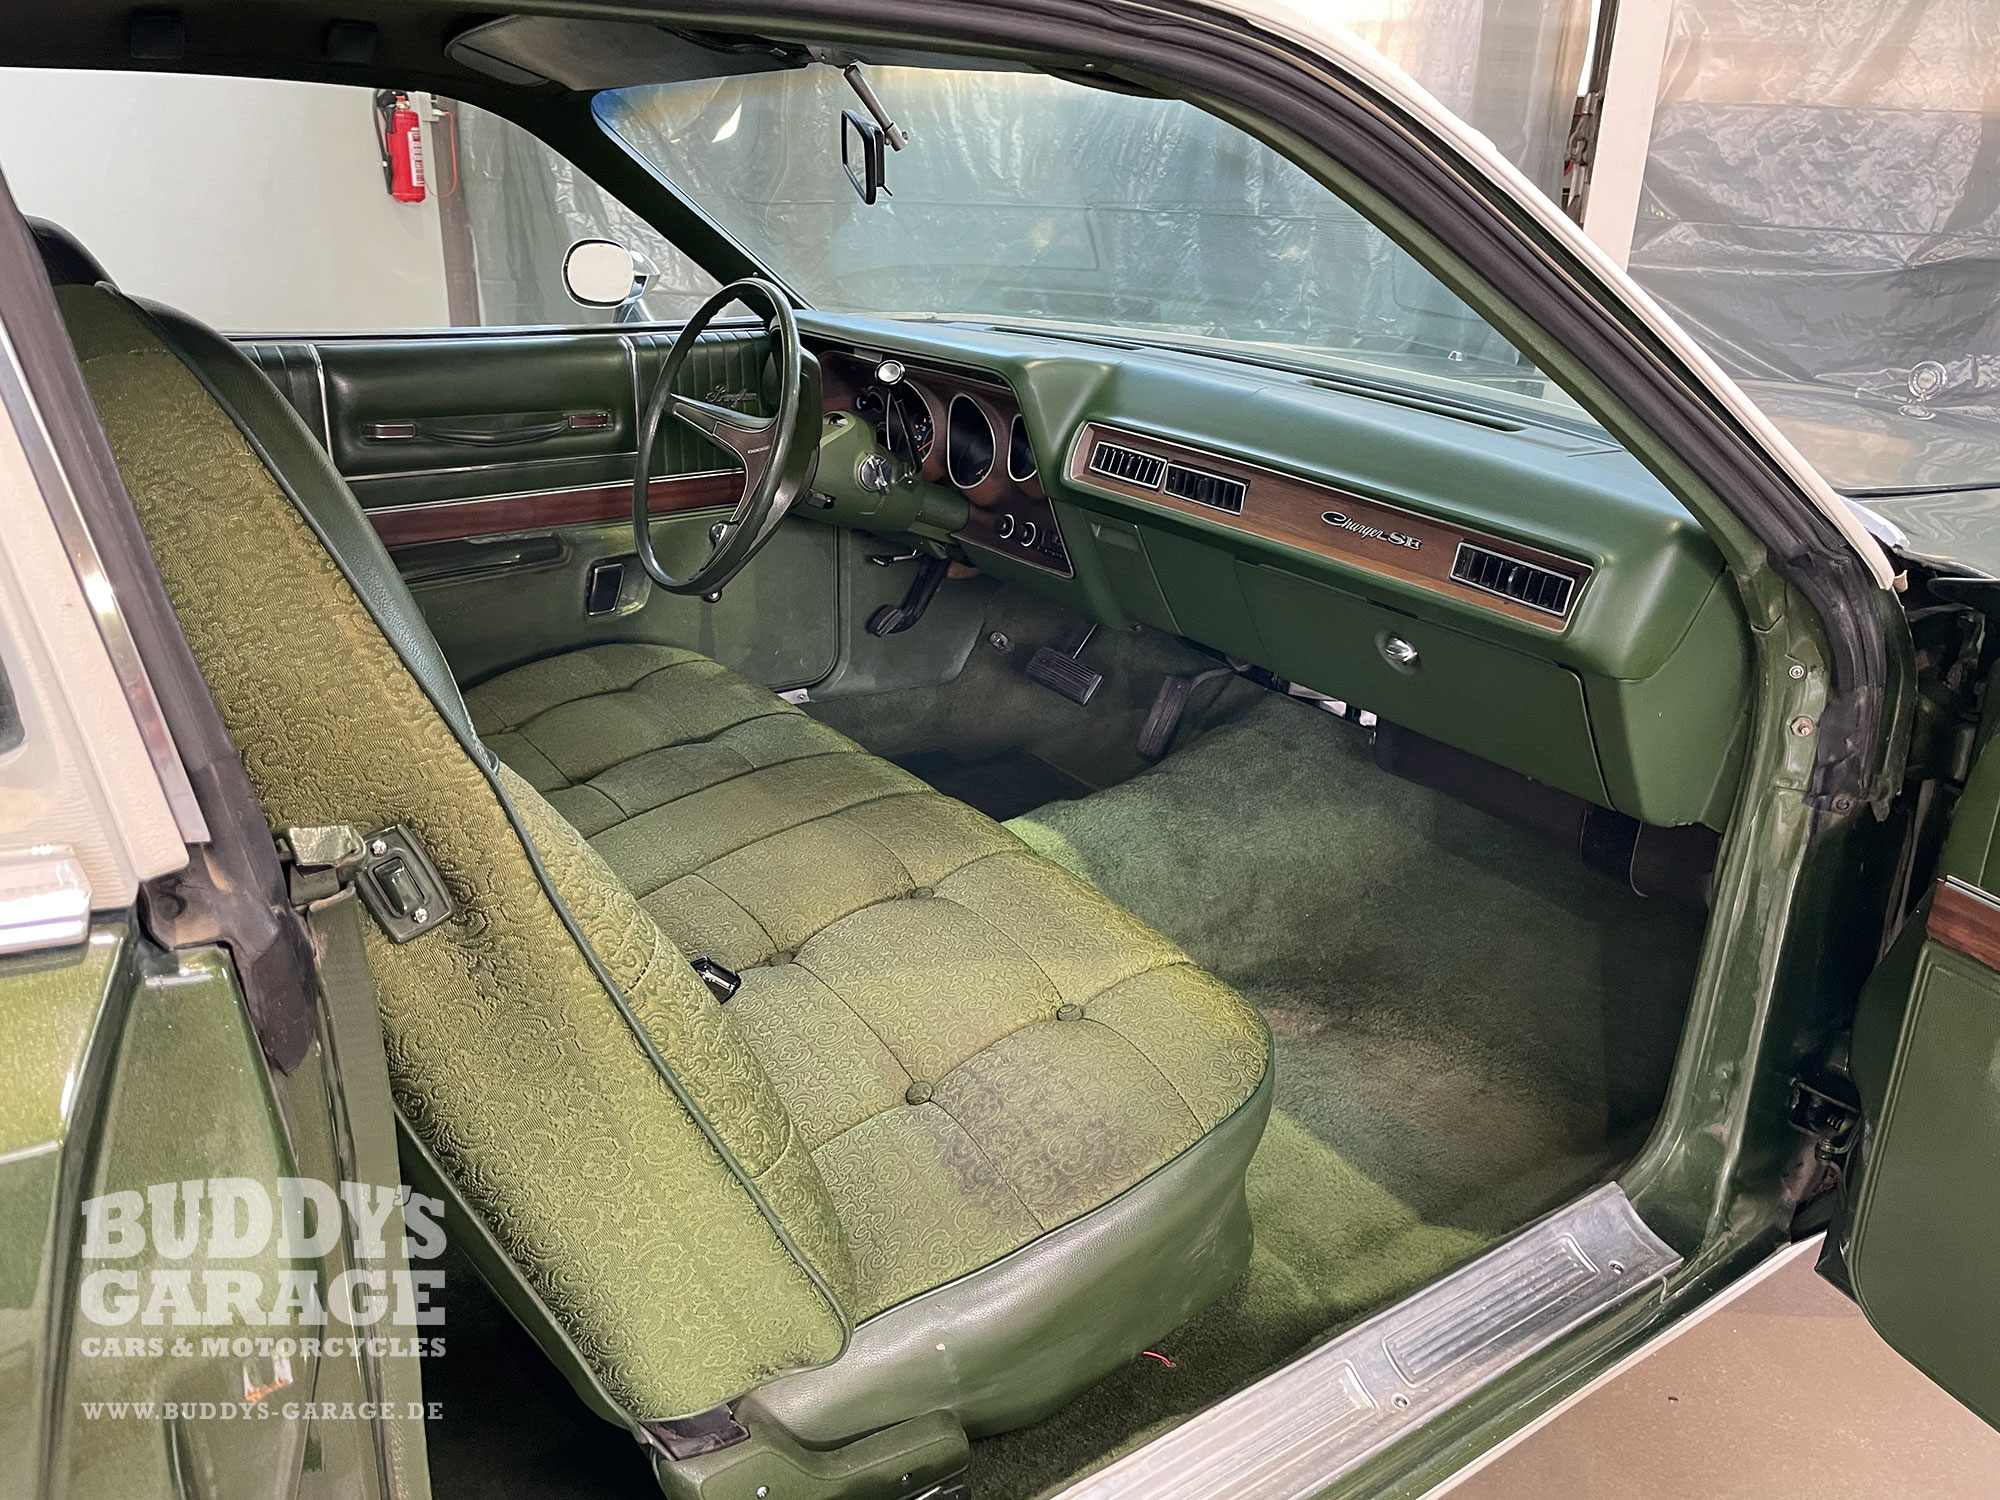 Dodge Charger 1973 | Buddy's Garage Bad Oeynhausen